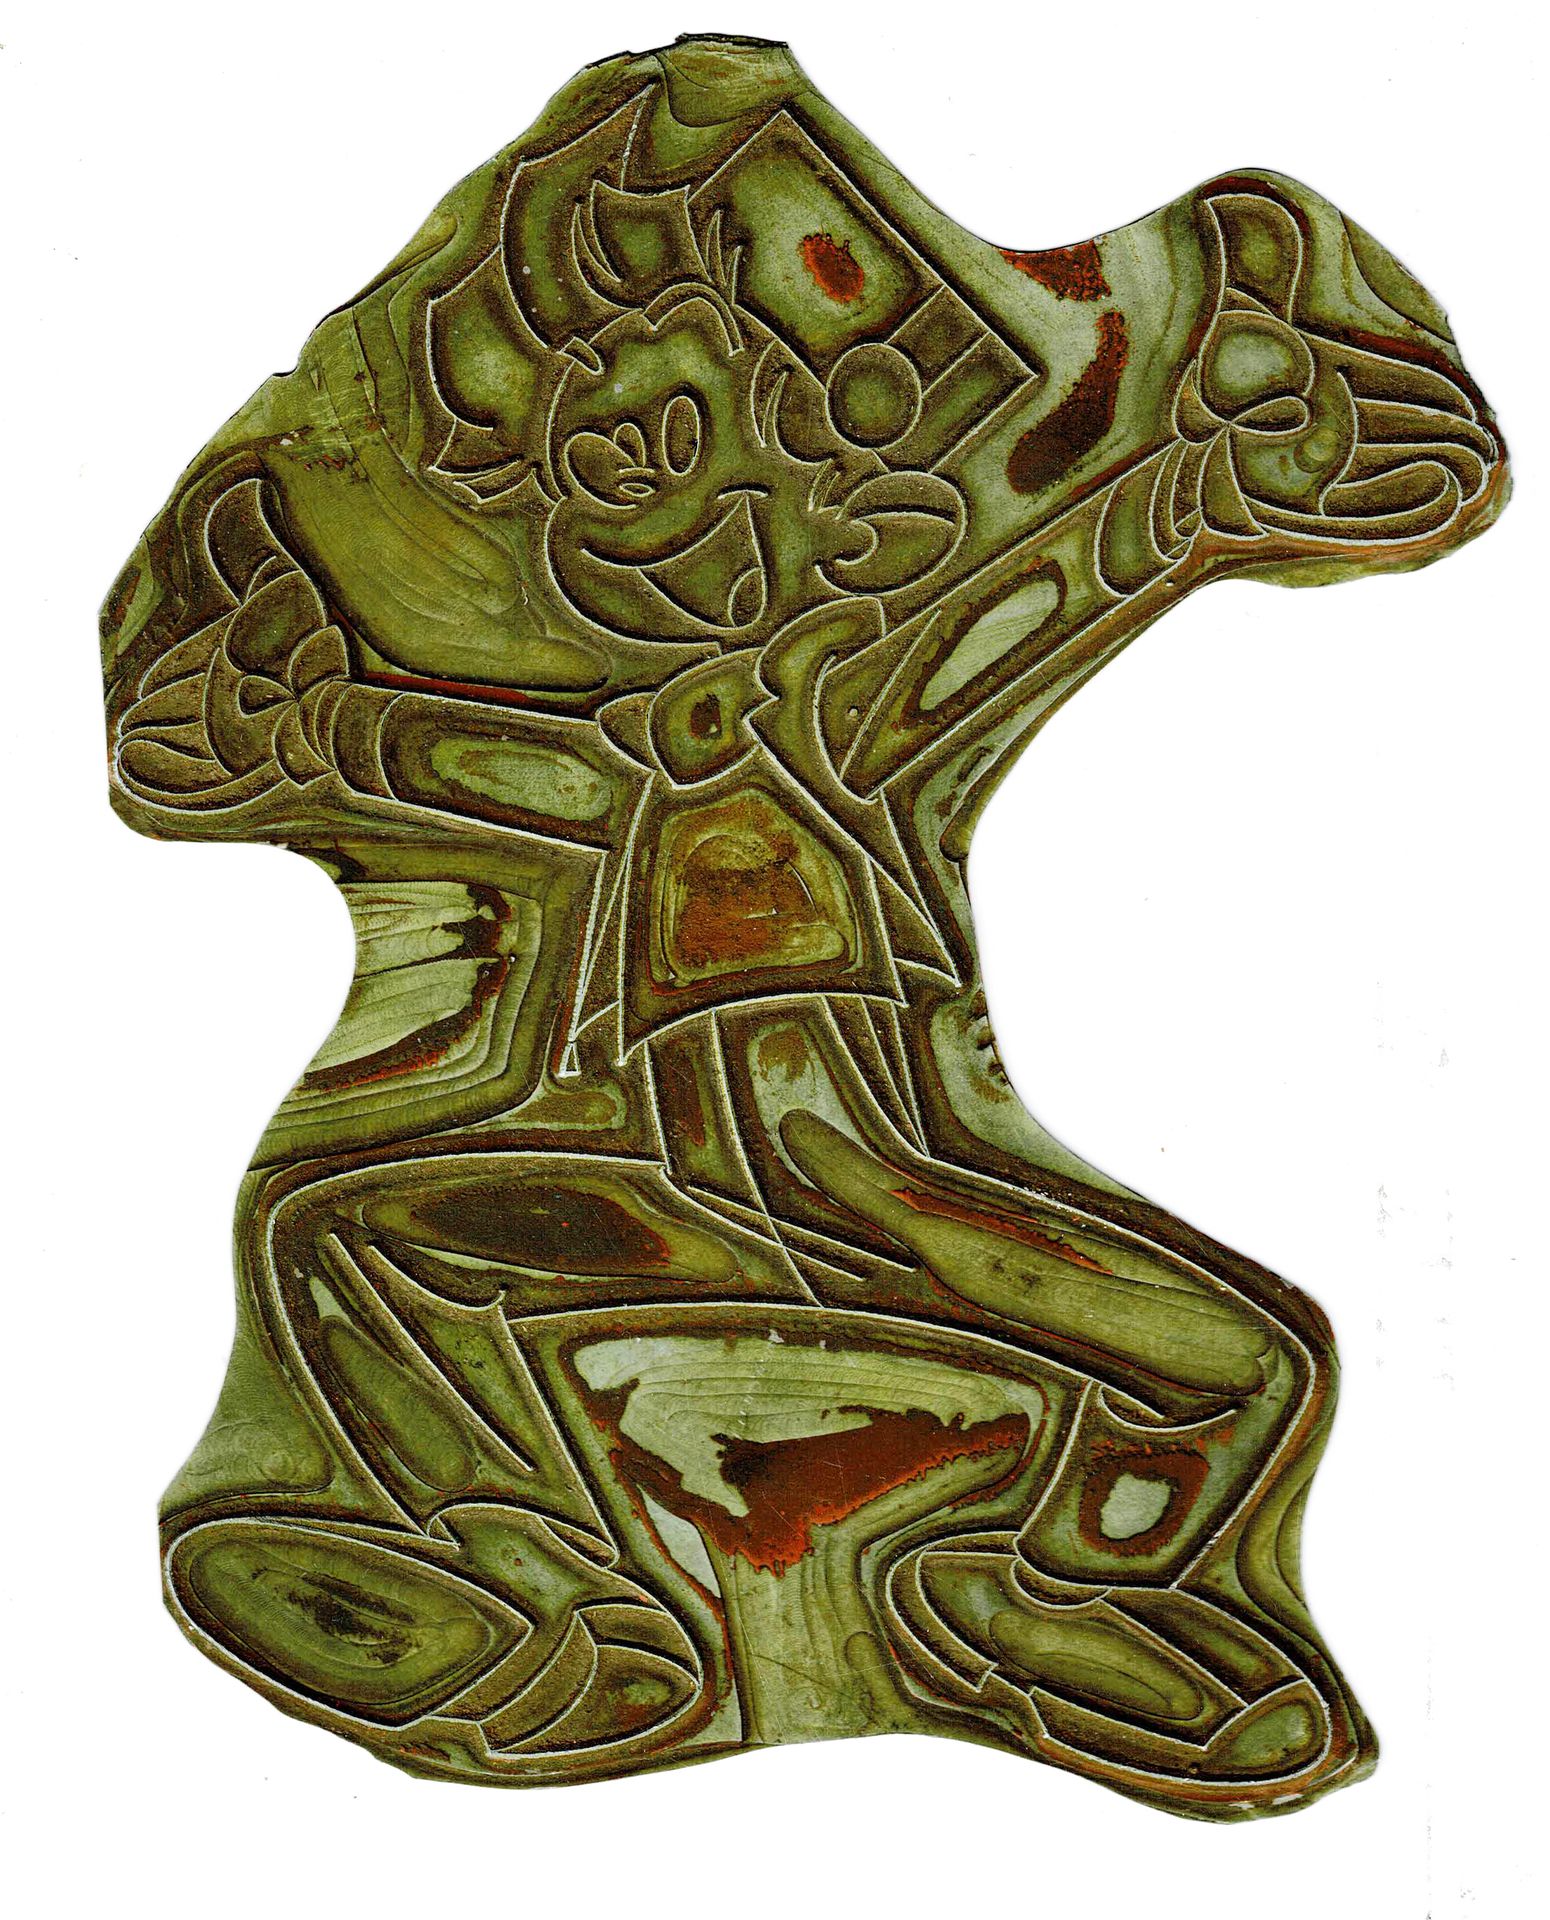 André FRANQUIN 
Spirou Plage printing plate, 1960s, 22 cm.